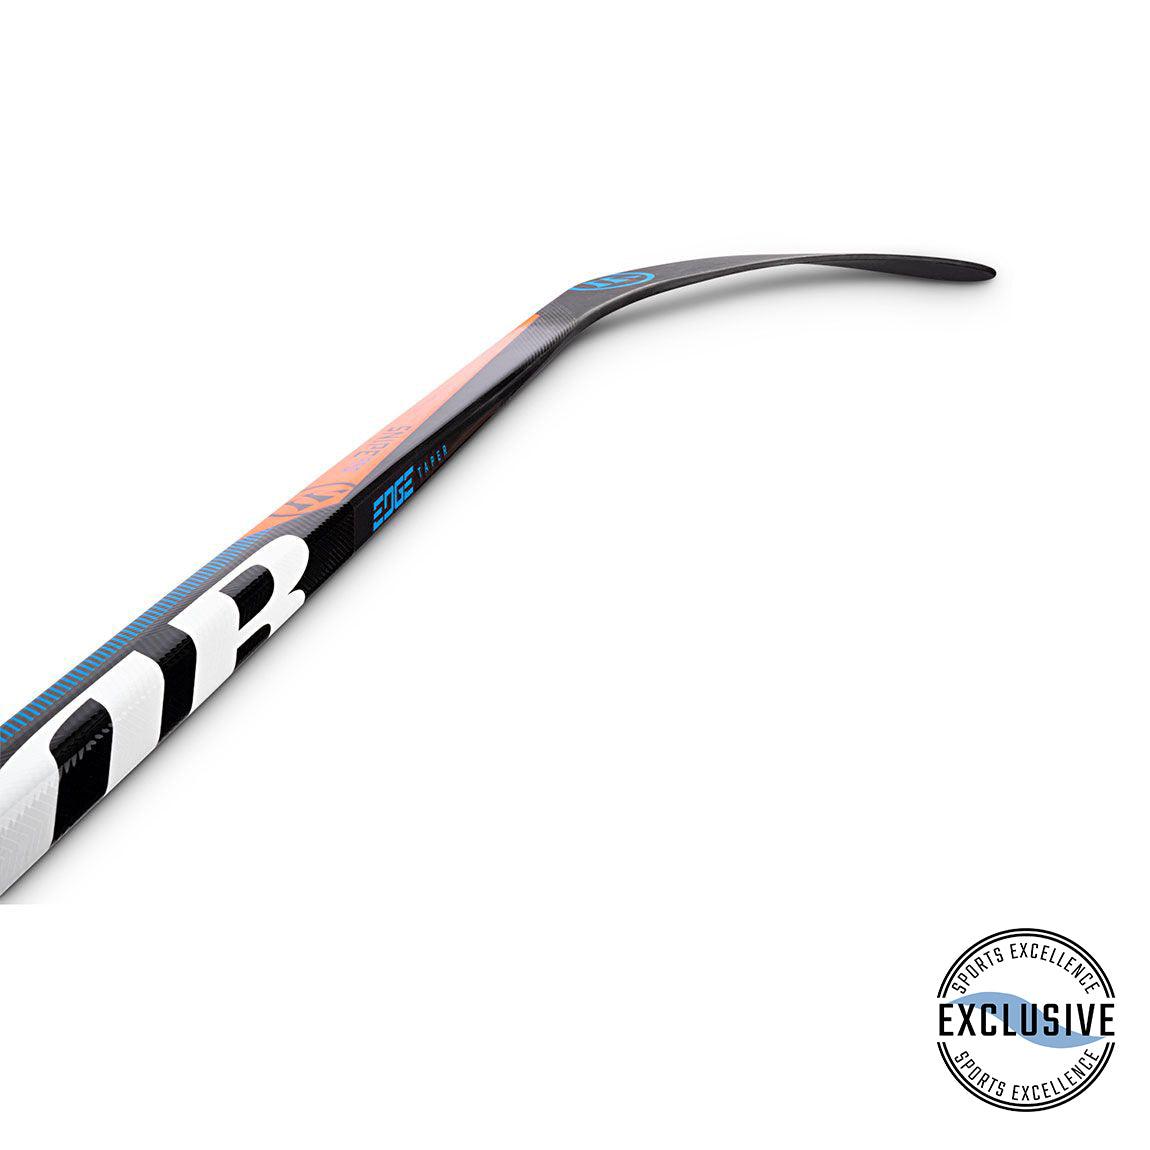 Snipe Pro Hockey Stick - Intermediate - Sports Excellence